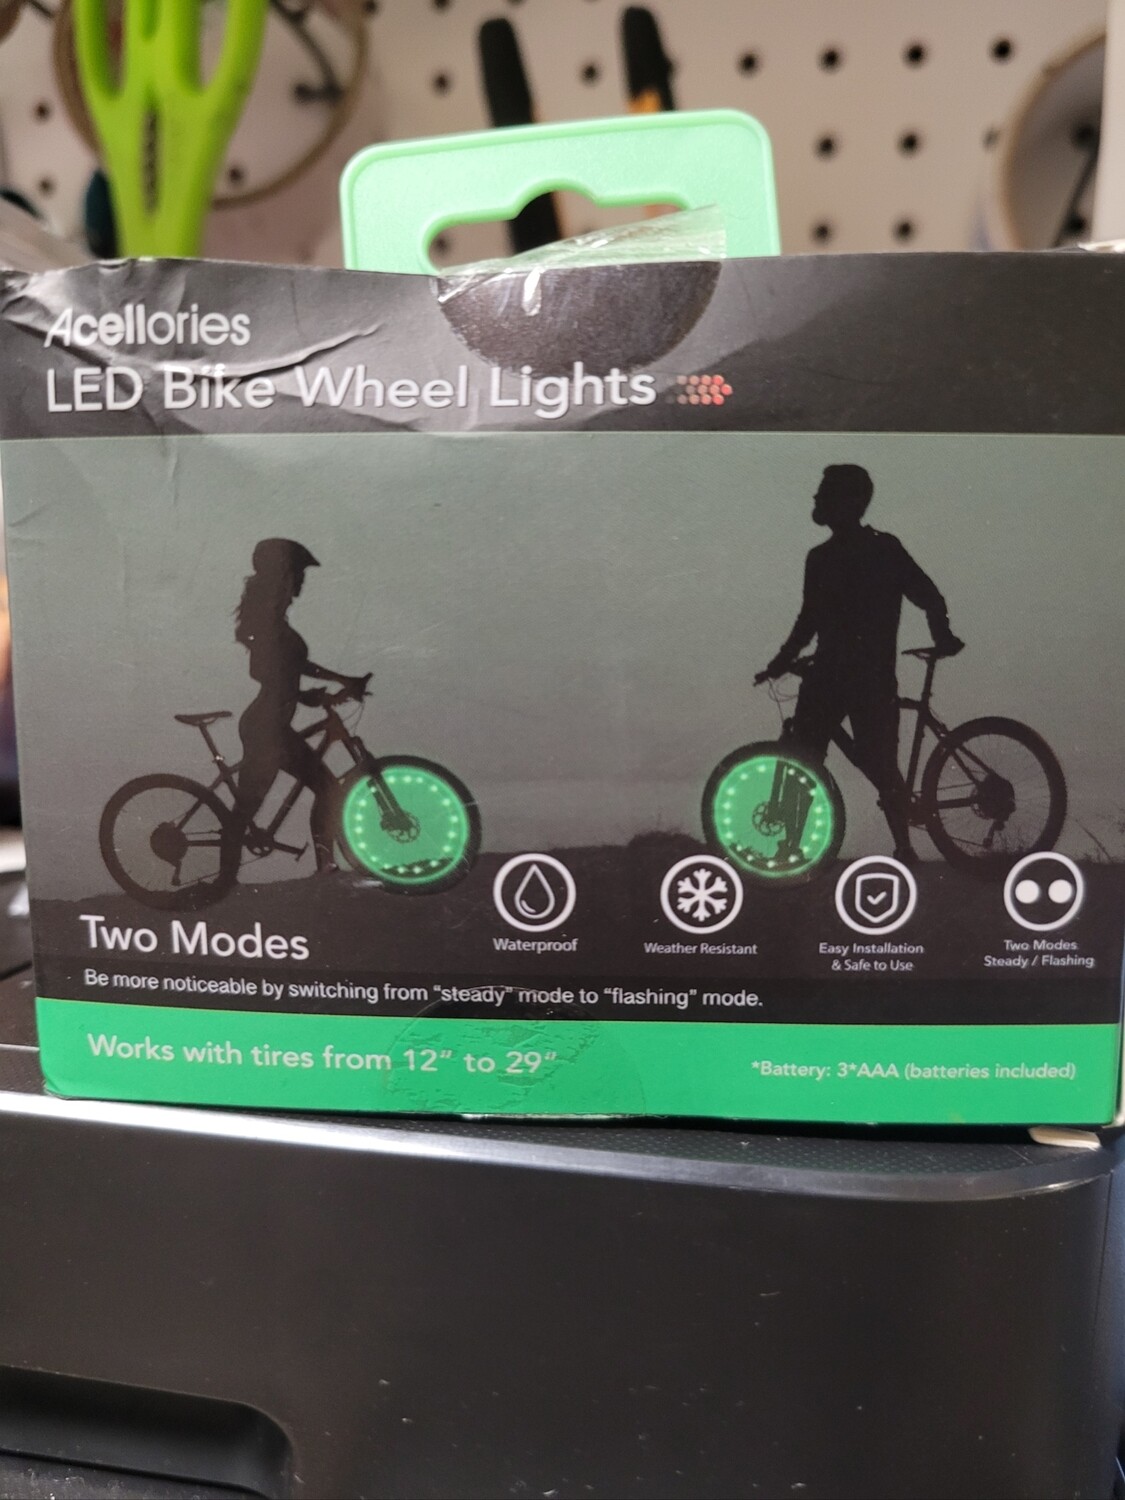 LED Bike Wheel Lights Acellories Green